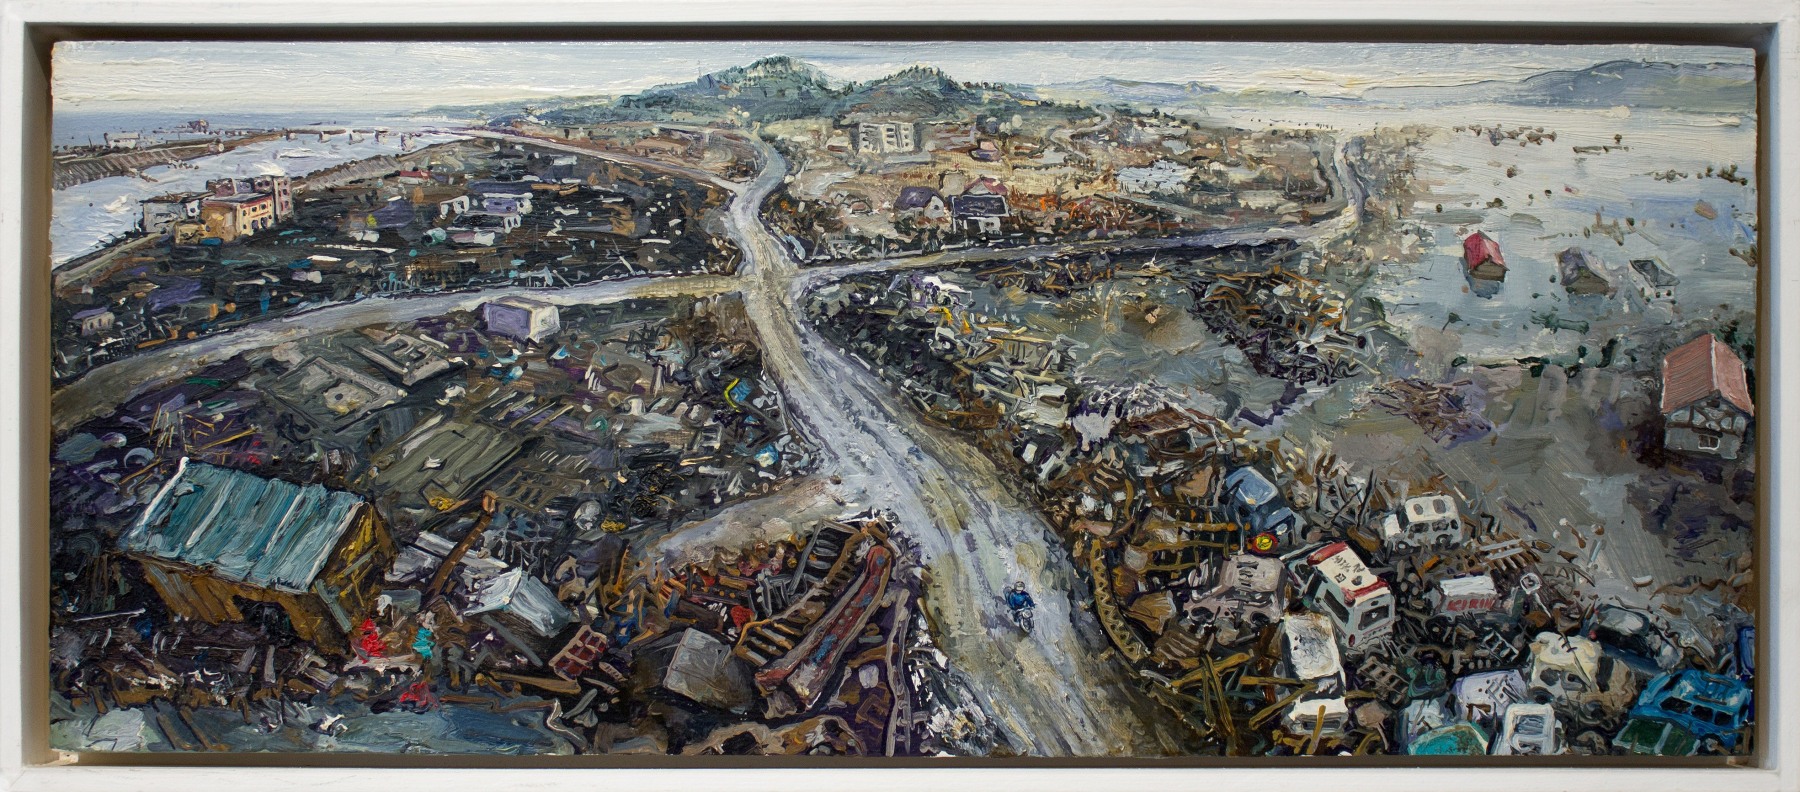 Amer Kobaslija,&amp;nbsp;Kesennuma Port, March 18,&amp;nbsp;2011. Oil on wood panel, 11 x 25 inches.&amp;nbsp;

&amp;nbsp;